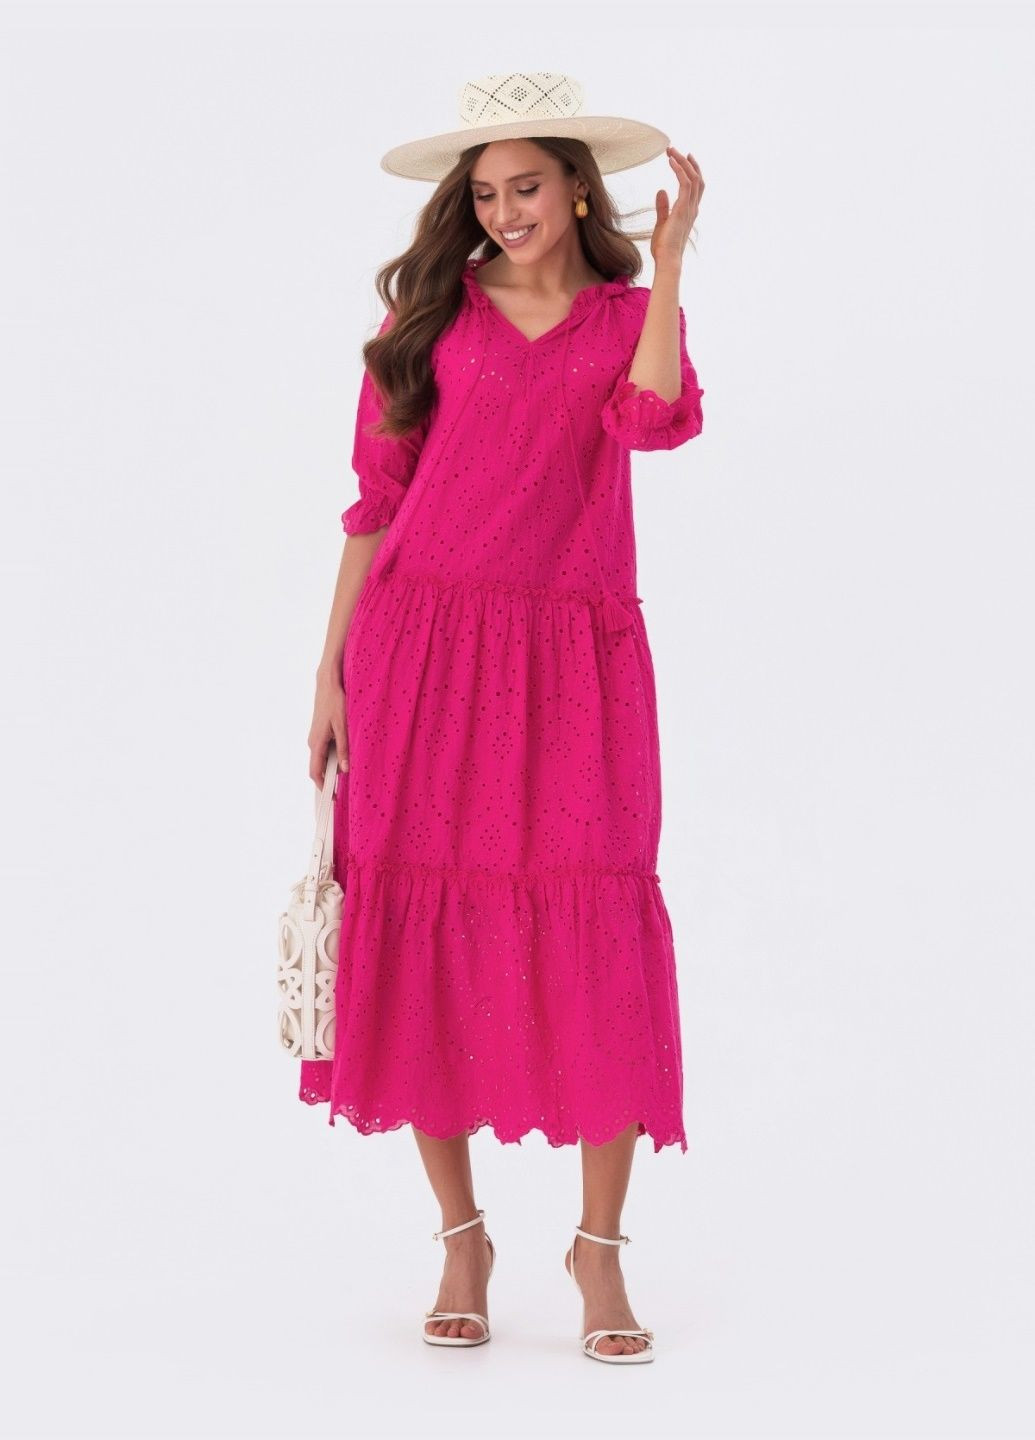 Фуксиновое (цвета Фуксия) платье а-силуэта из прошвы цвета фуксия Dressa